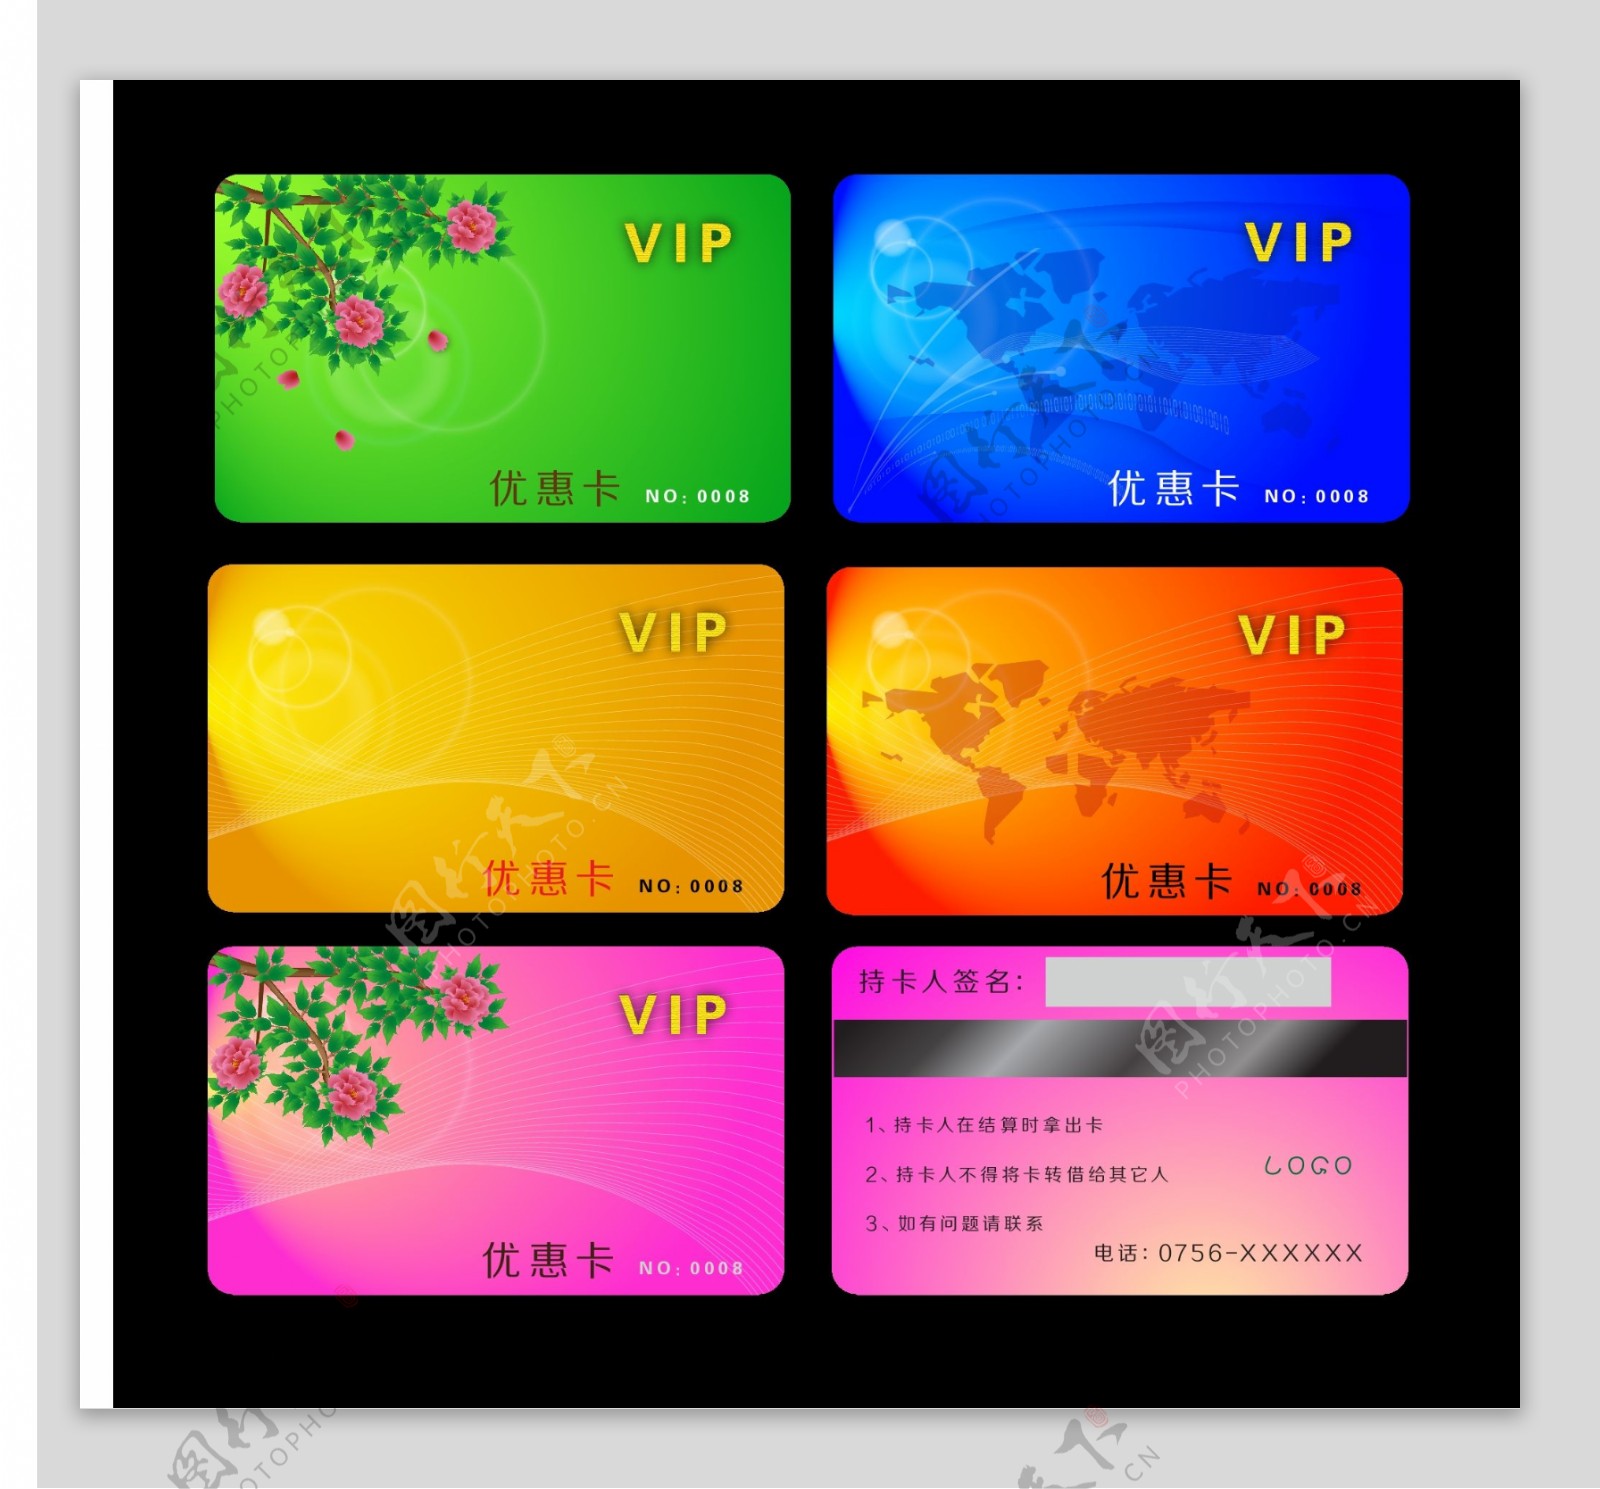 vip卡名片图片